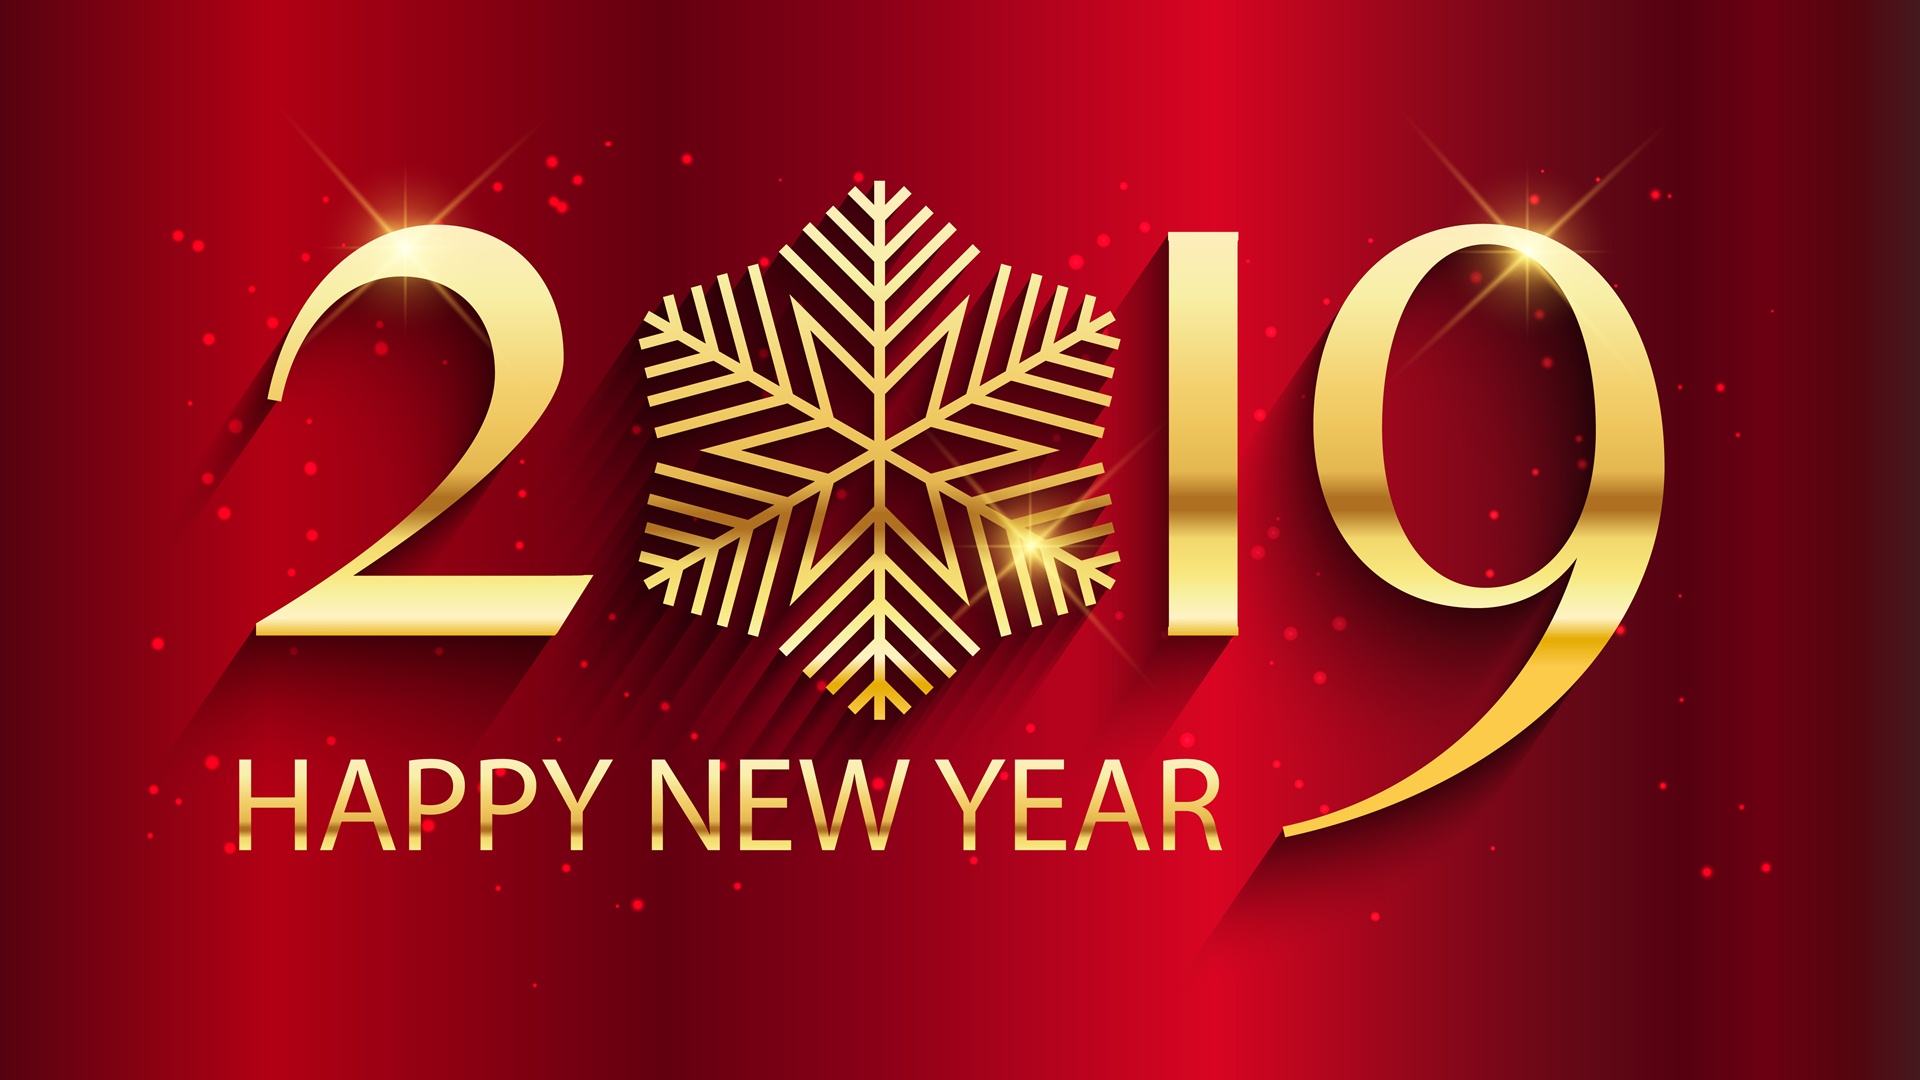 2019 Happy New Year Wallpaper Hd - 2019 Happy New Year - HD Wallpaper 